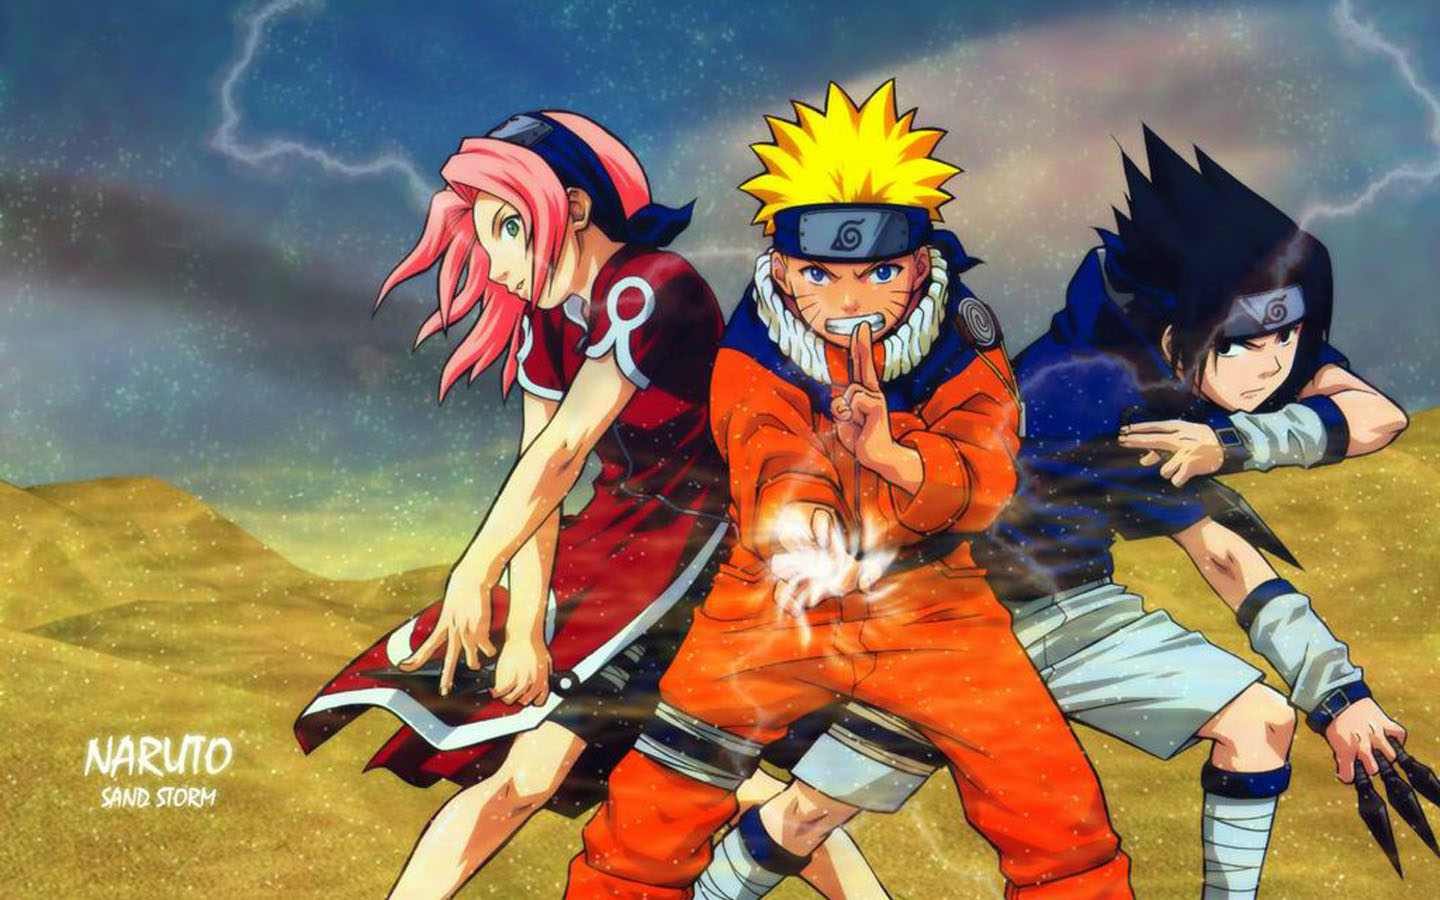 Classic Naruto desktop background picture